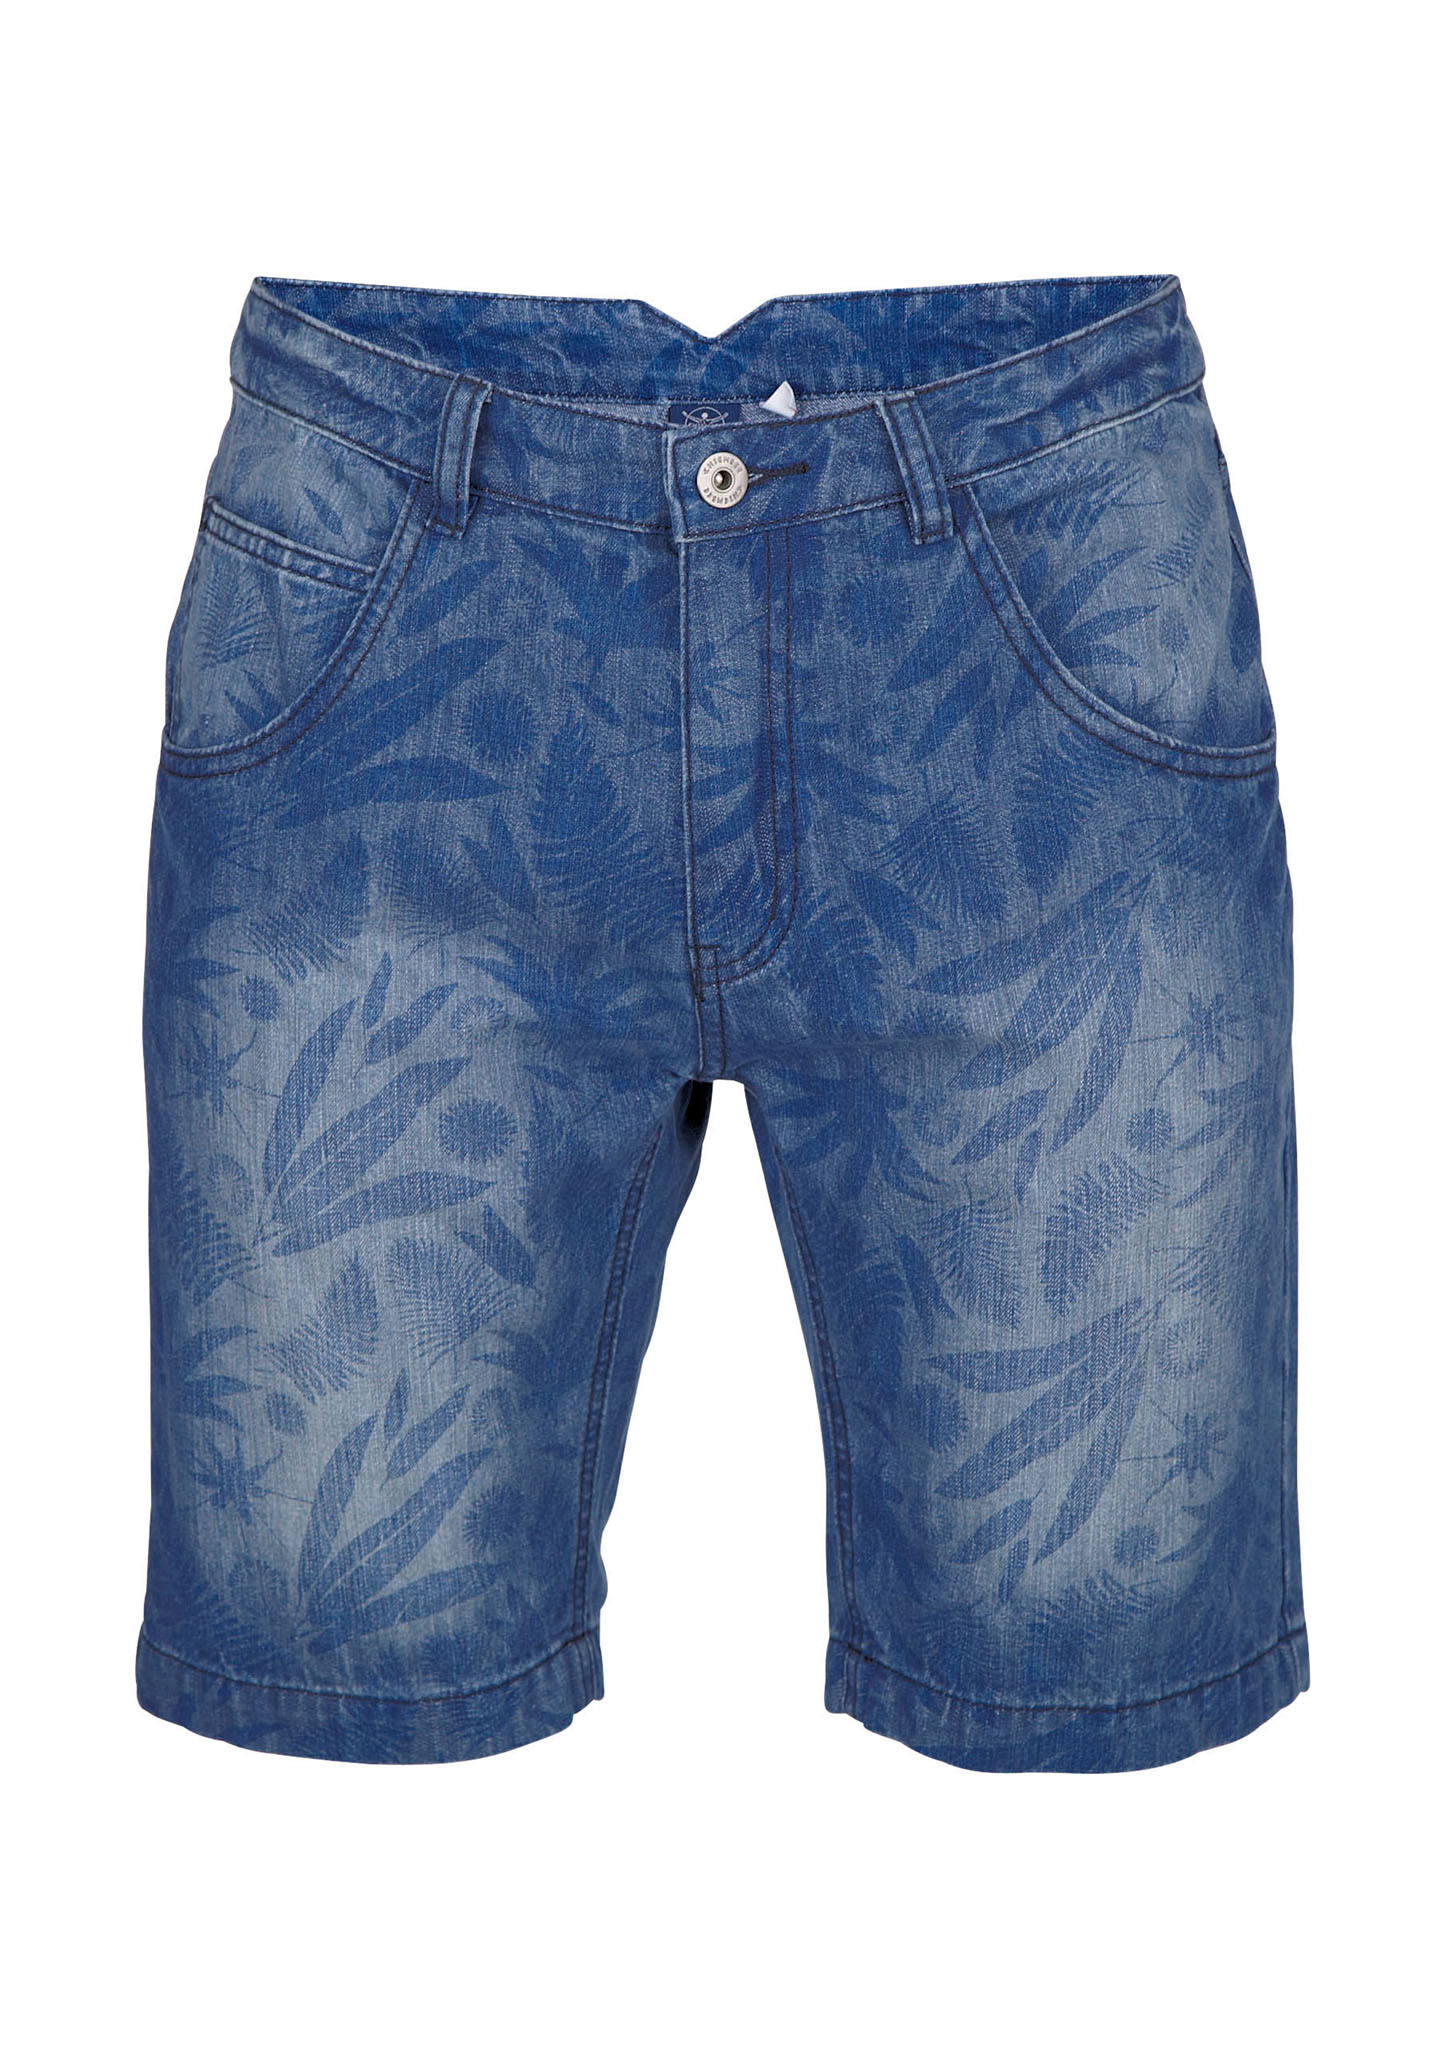 Chiemsee Lysandro Jeans Shorts maori-dschungel L